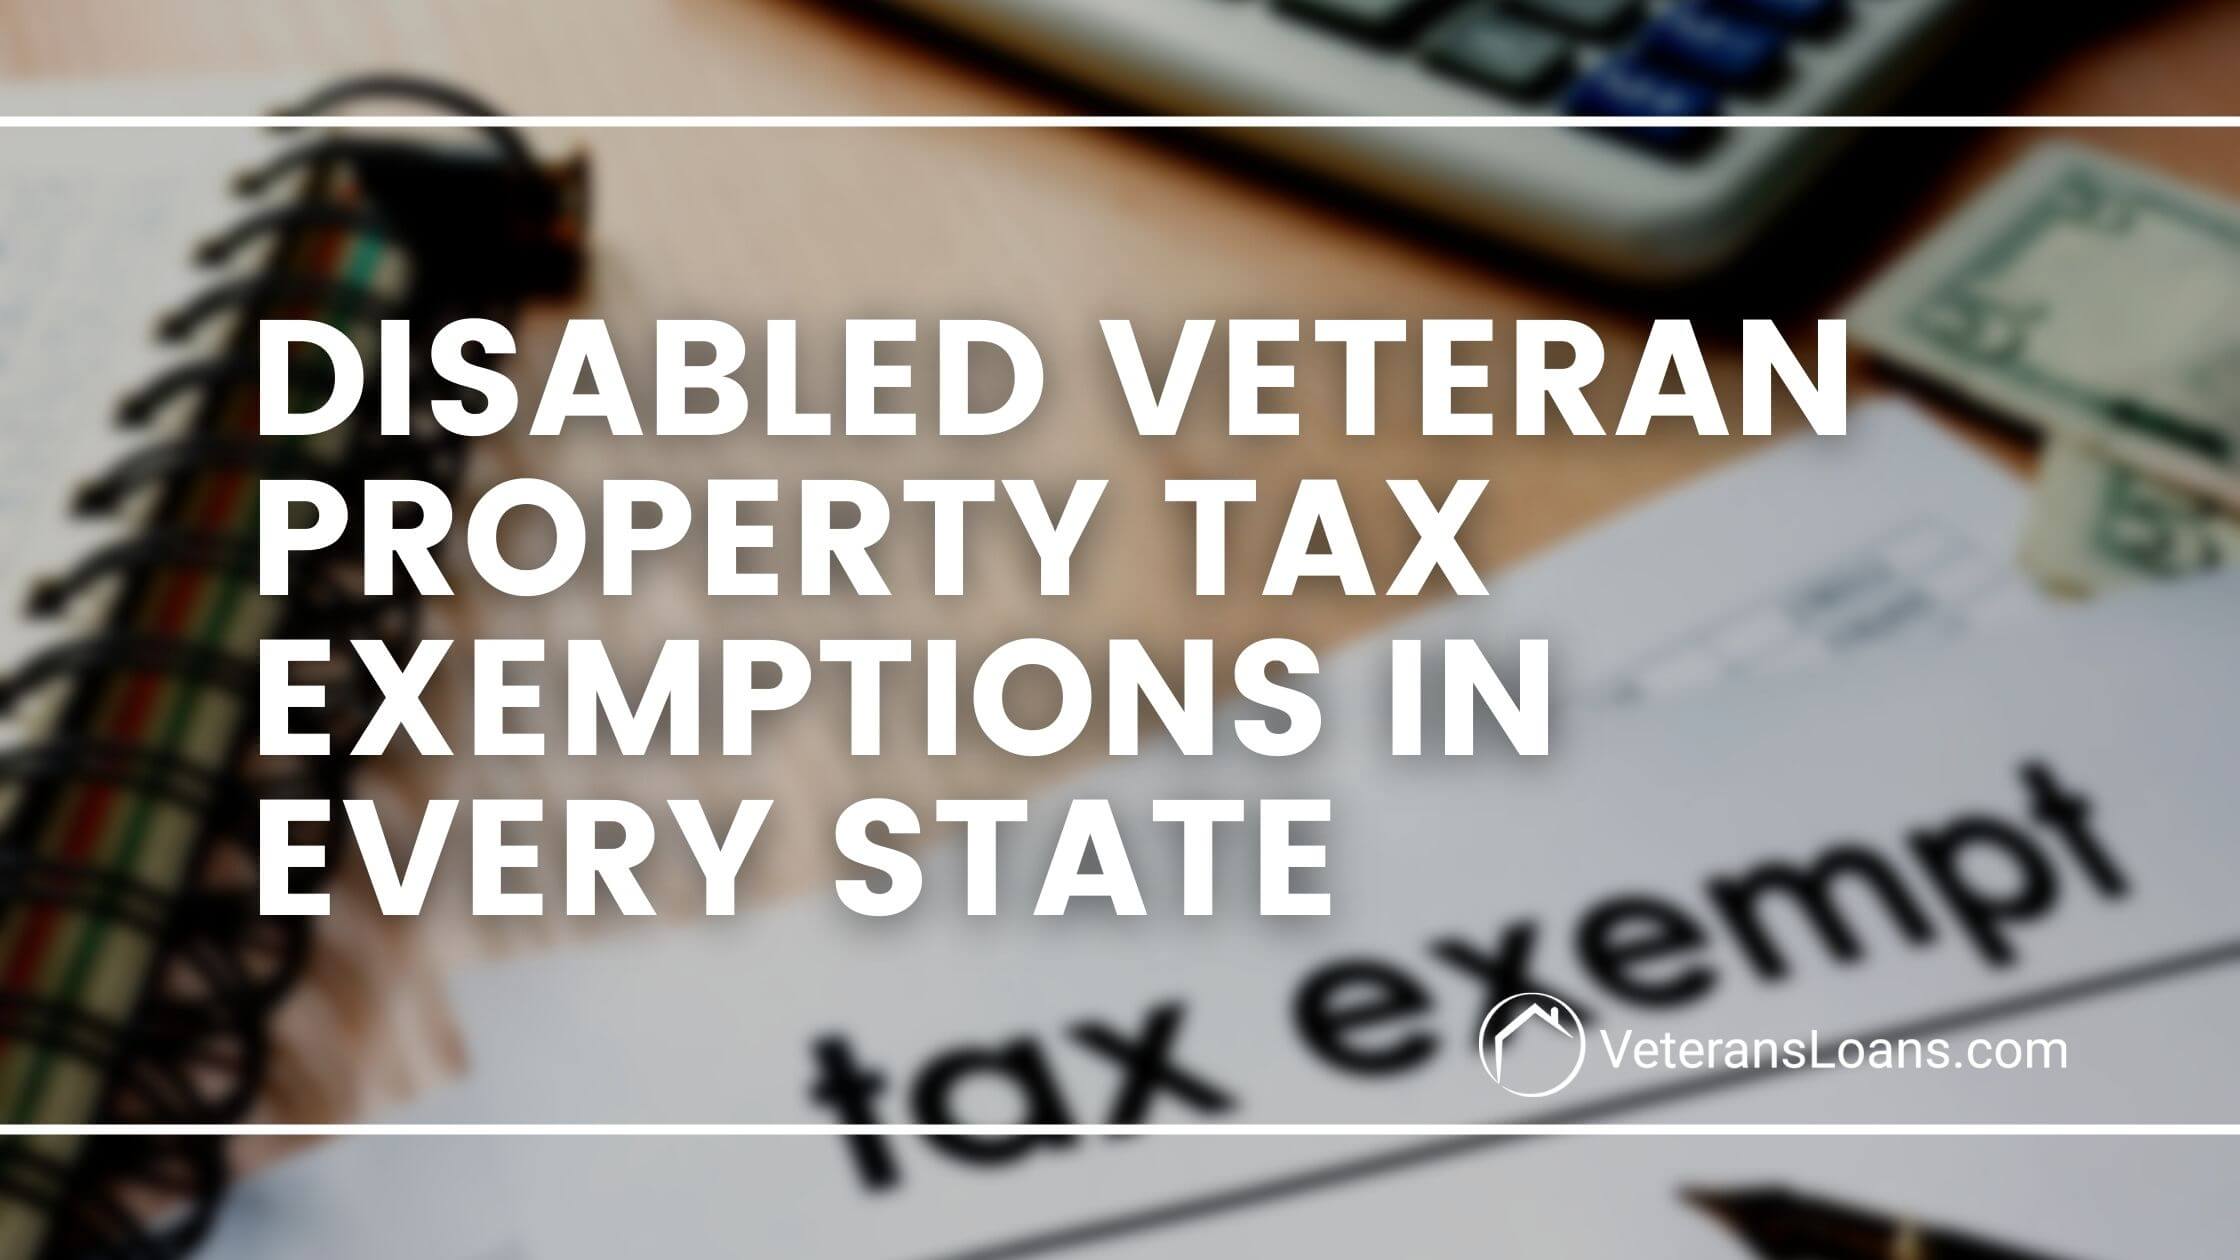 Idaho Veteran Property Tax Reduction